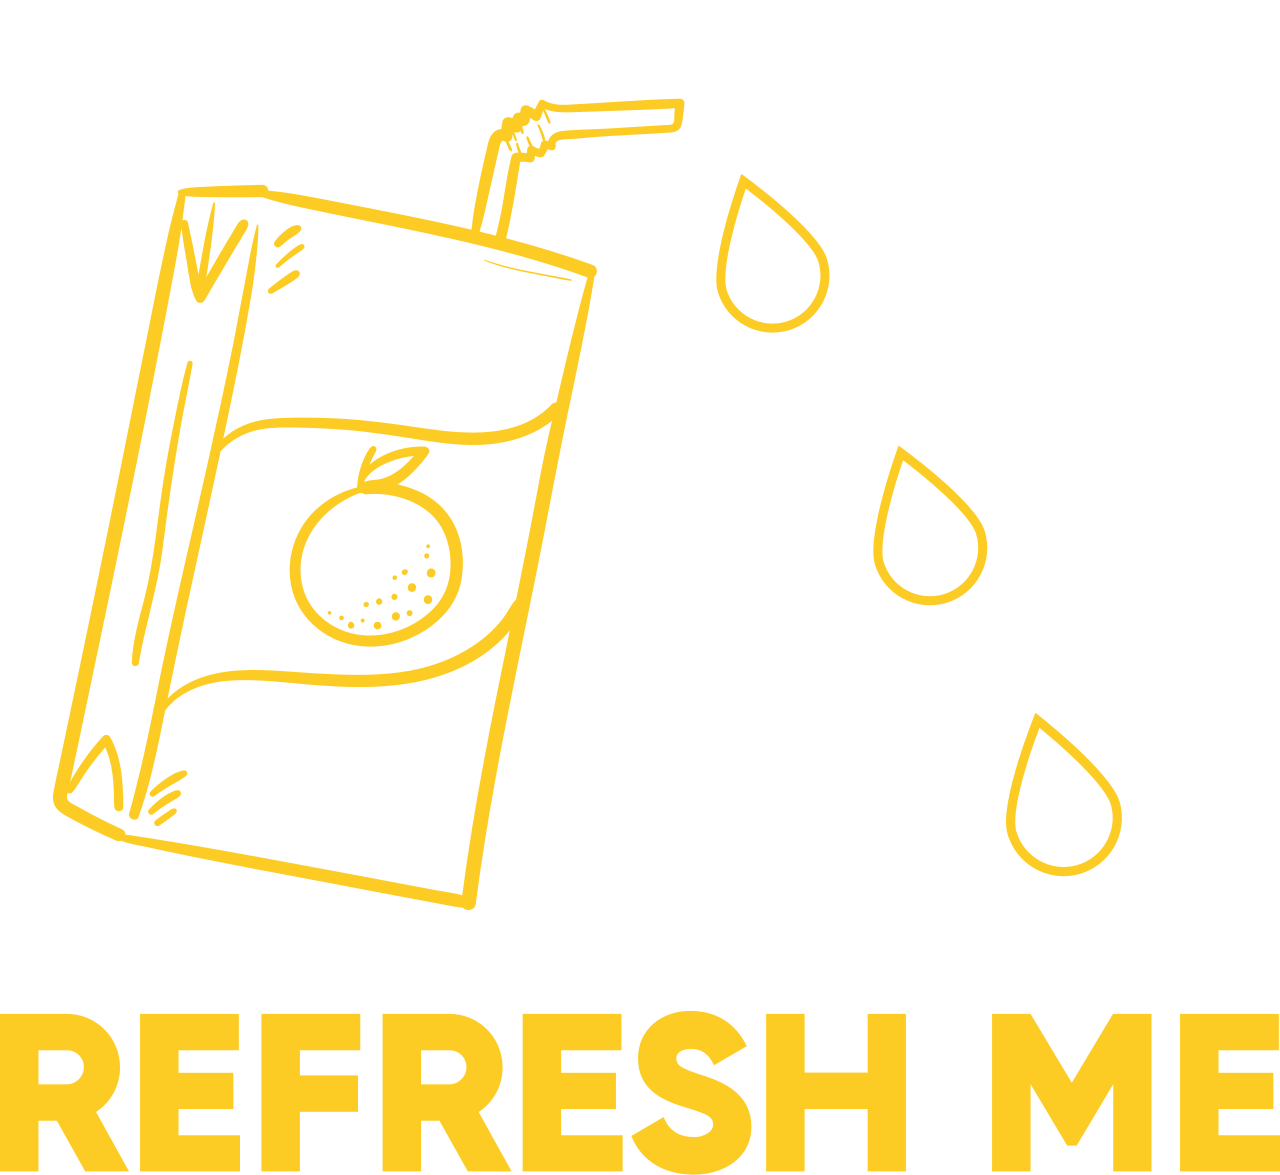 Refresh me's logo